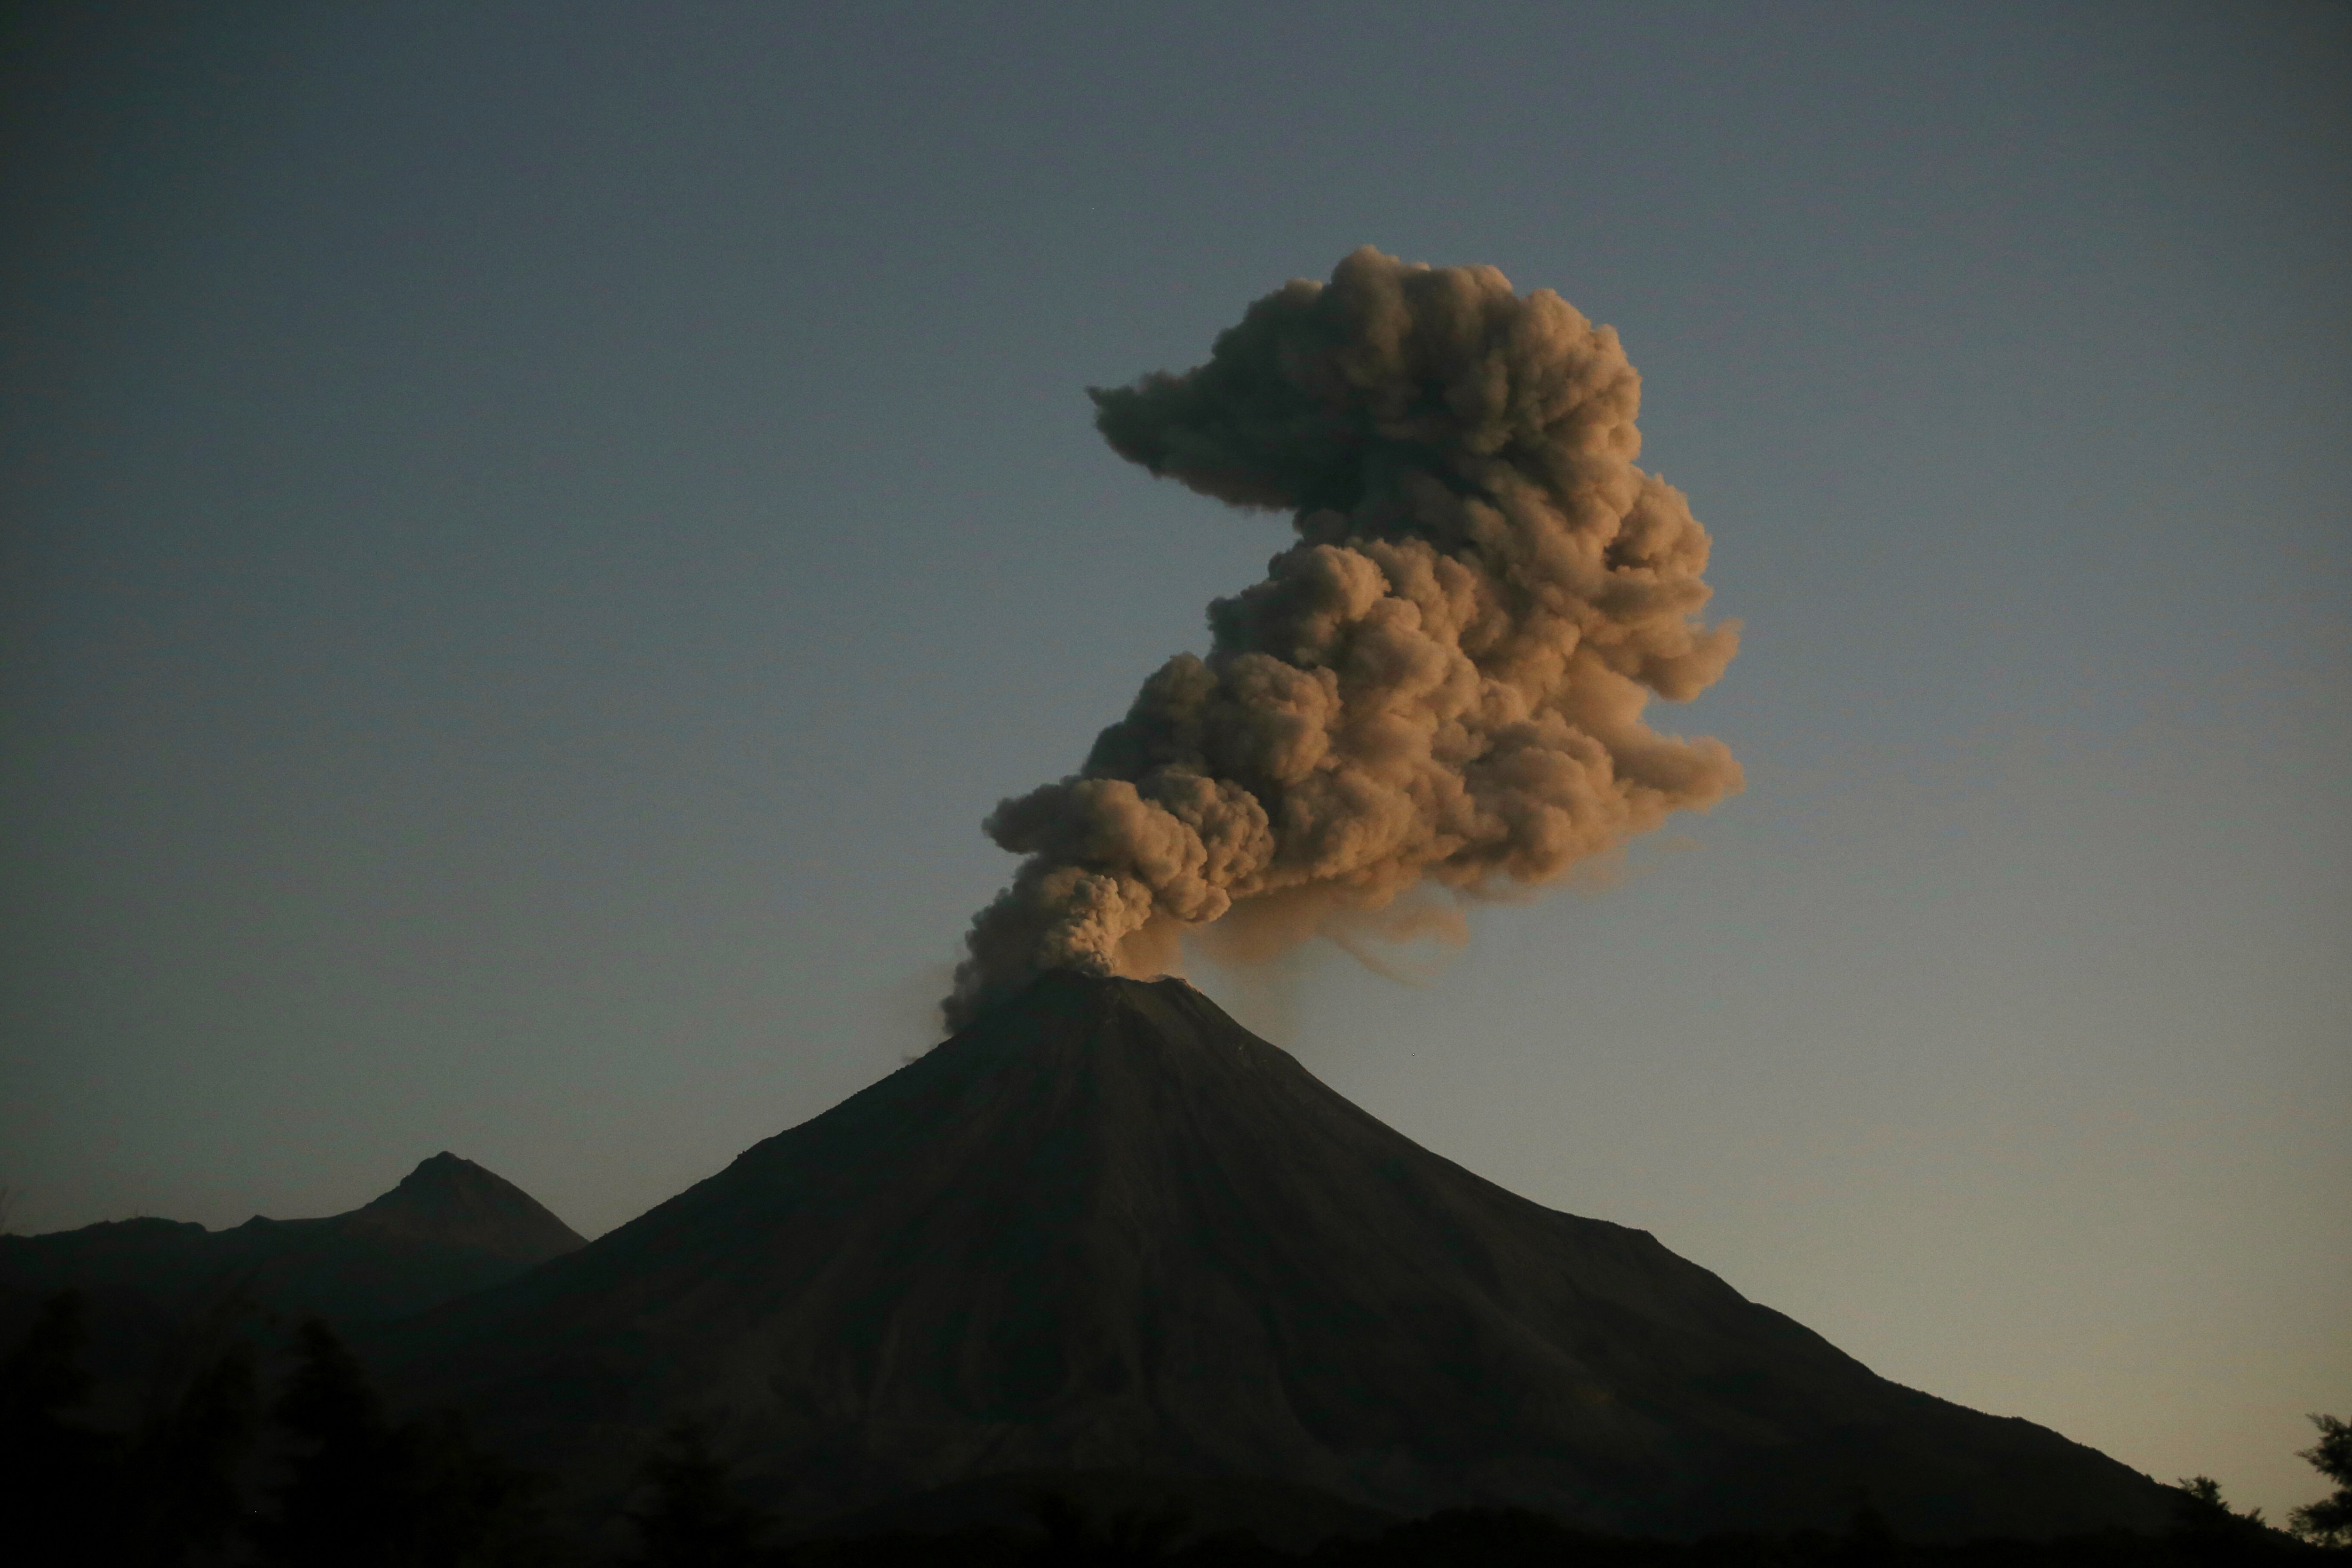  Volcán de Colima registra exhalación de 1.9 kilómetros